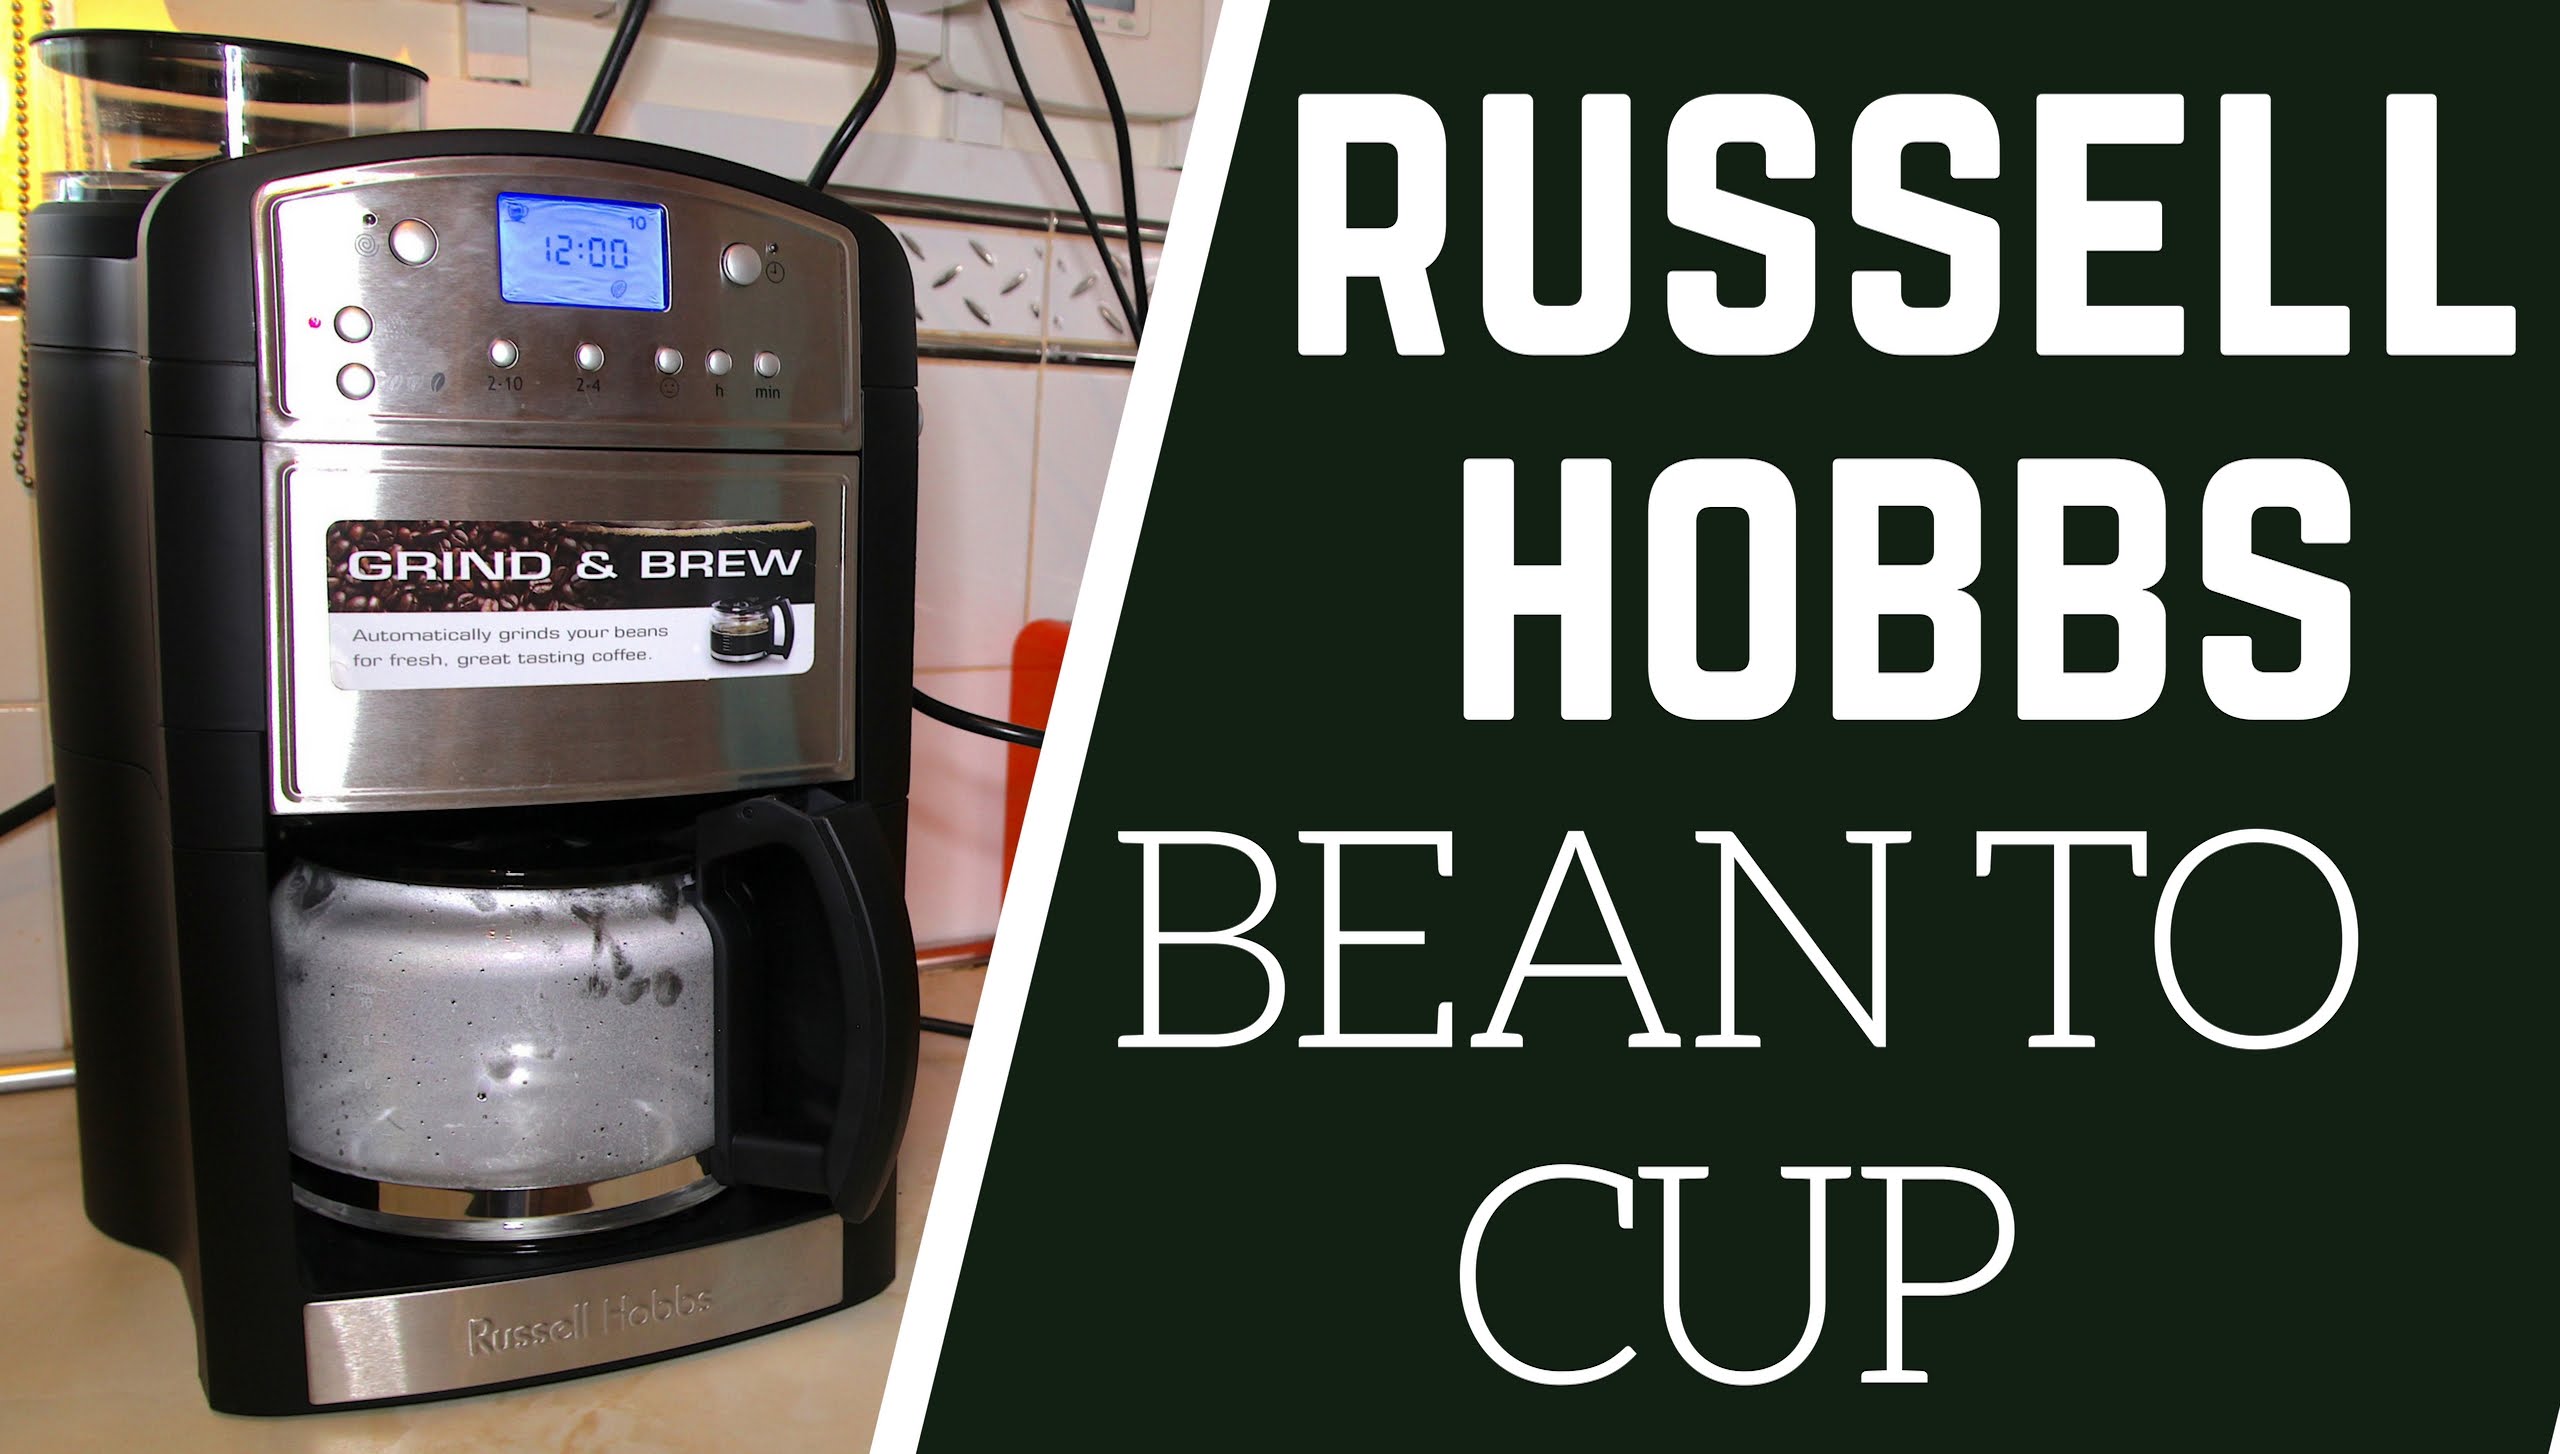 Russell Hobbs Platinum Coffee Maker Review